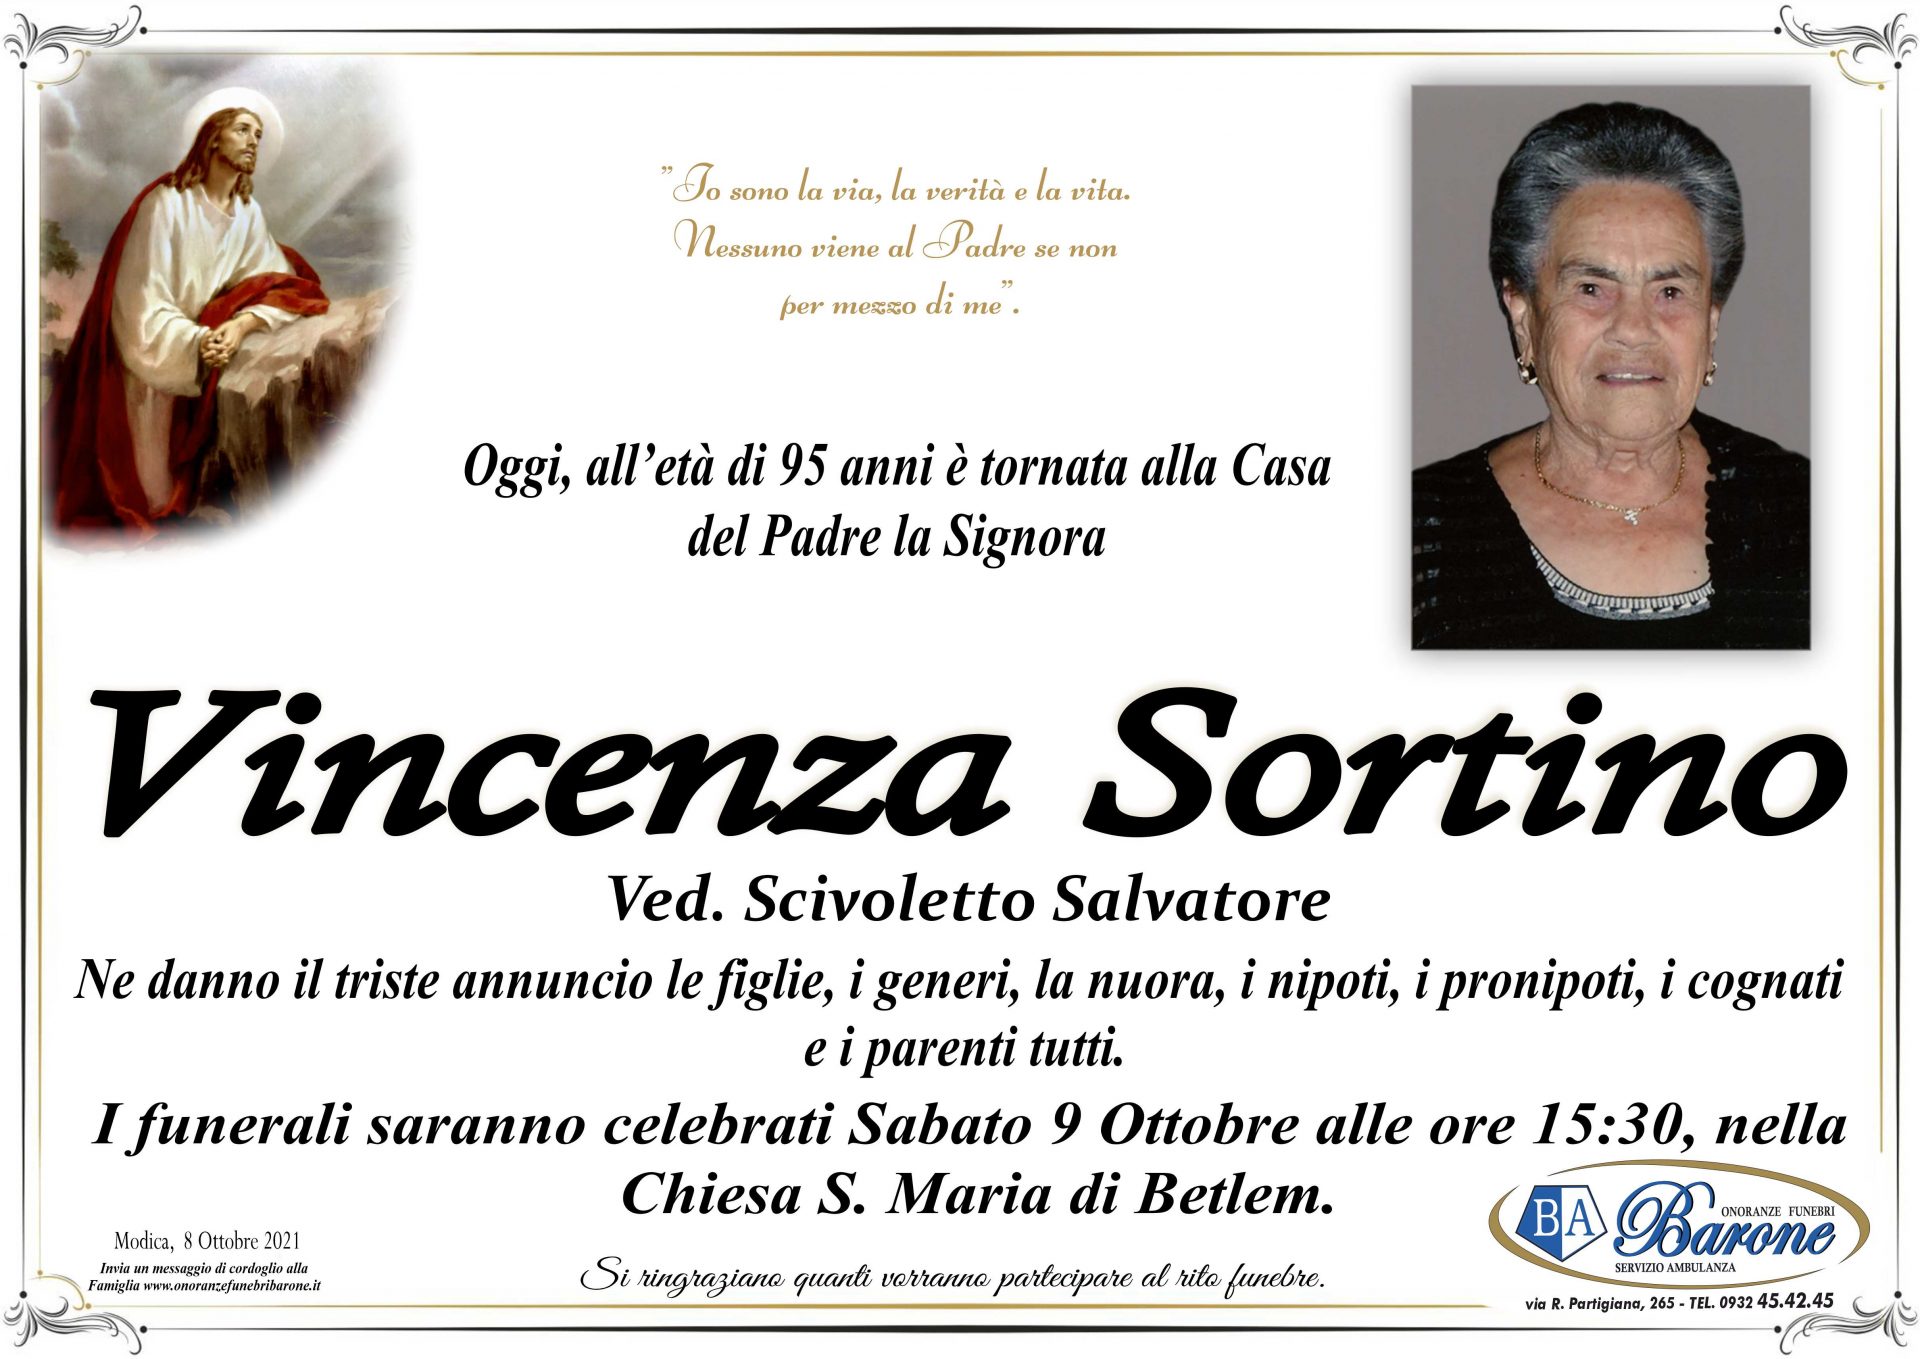 Vincenza Sortino